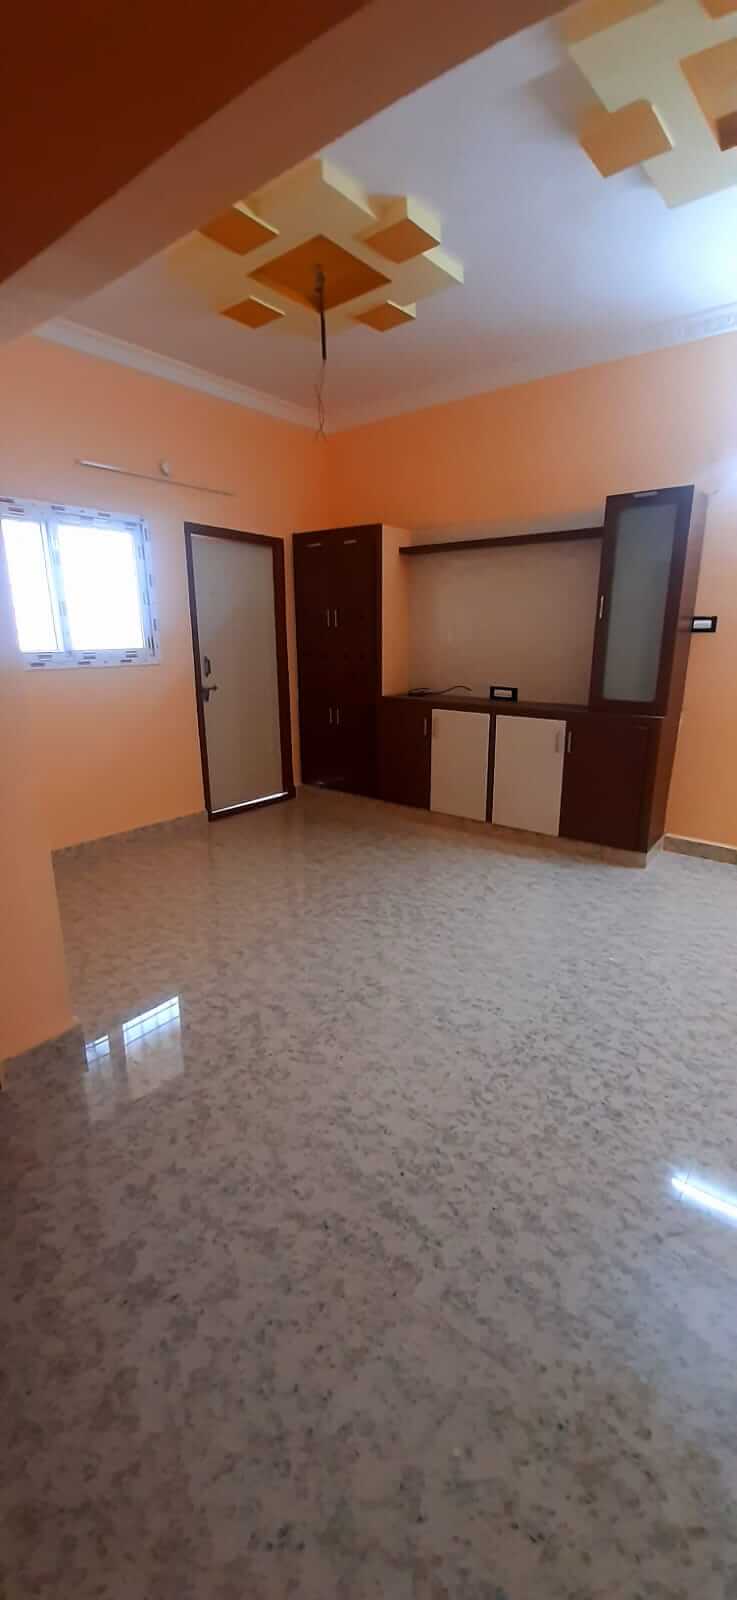 2 BHK Apartment / Flat for Rent 1200 Sq. Feet at Tirupati
